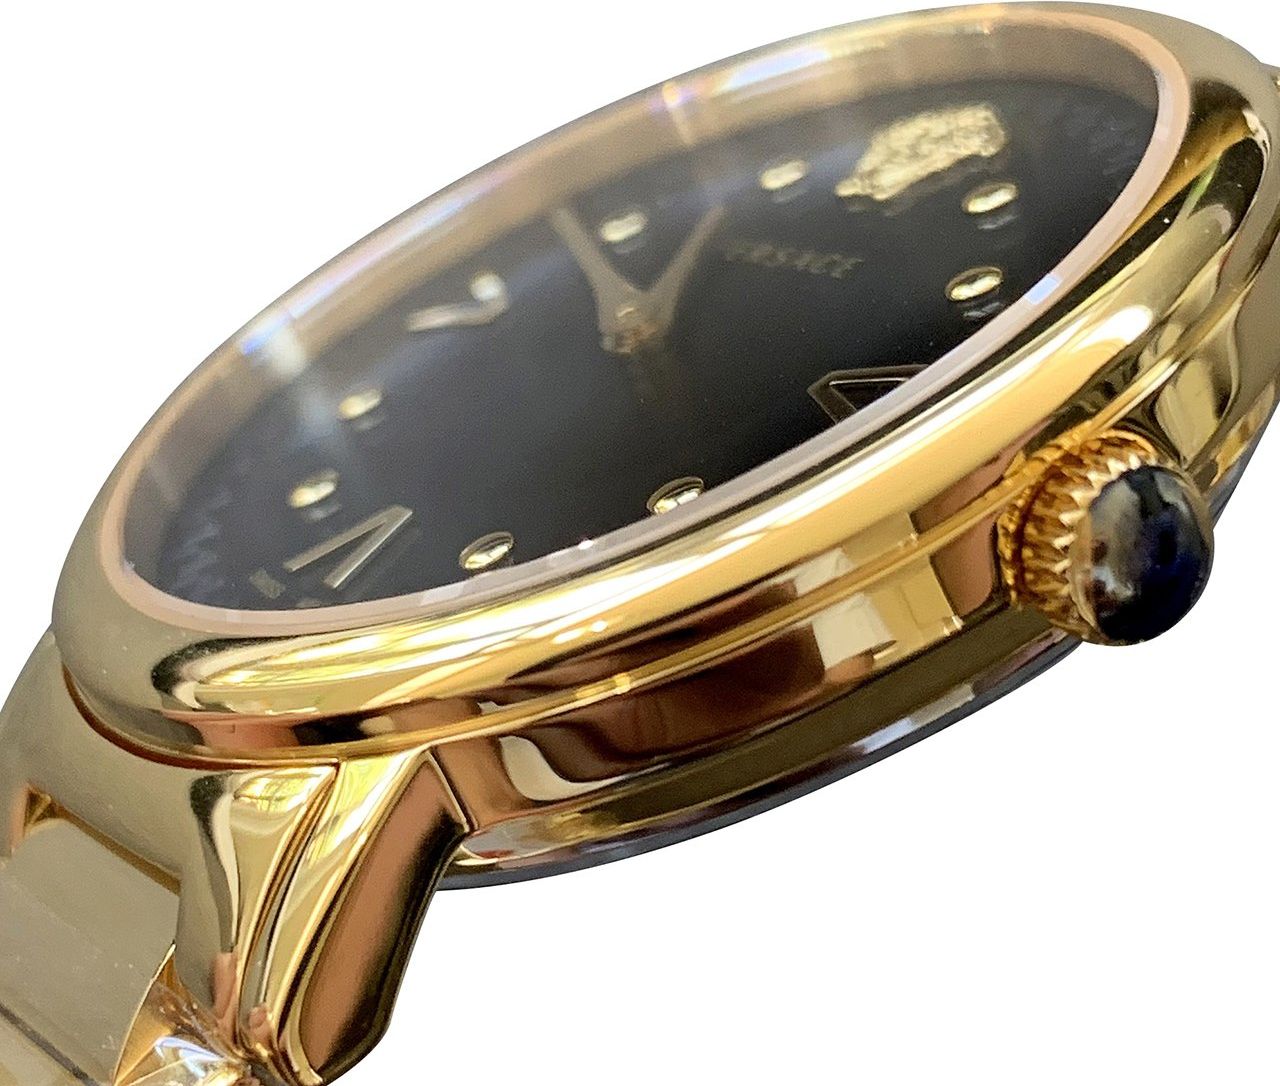 Versace VEVD00619 Pop Chic dames horloge 36mm Zwart